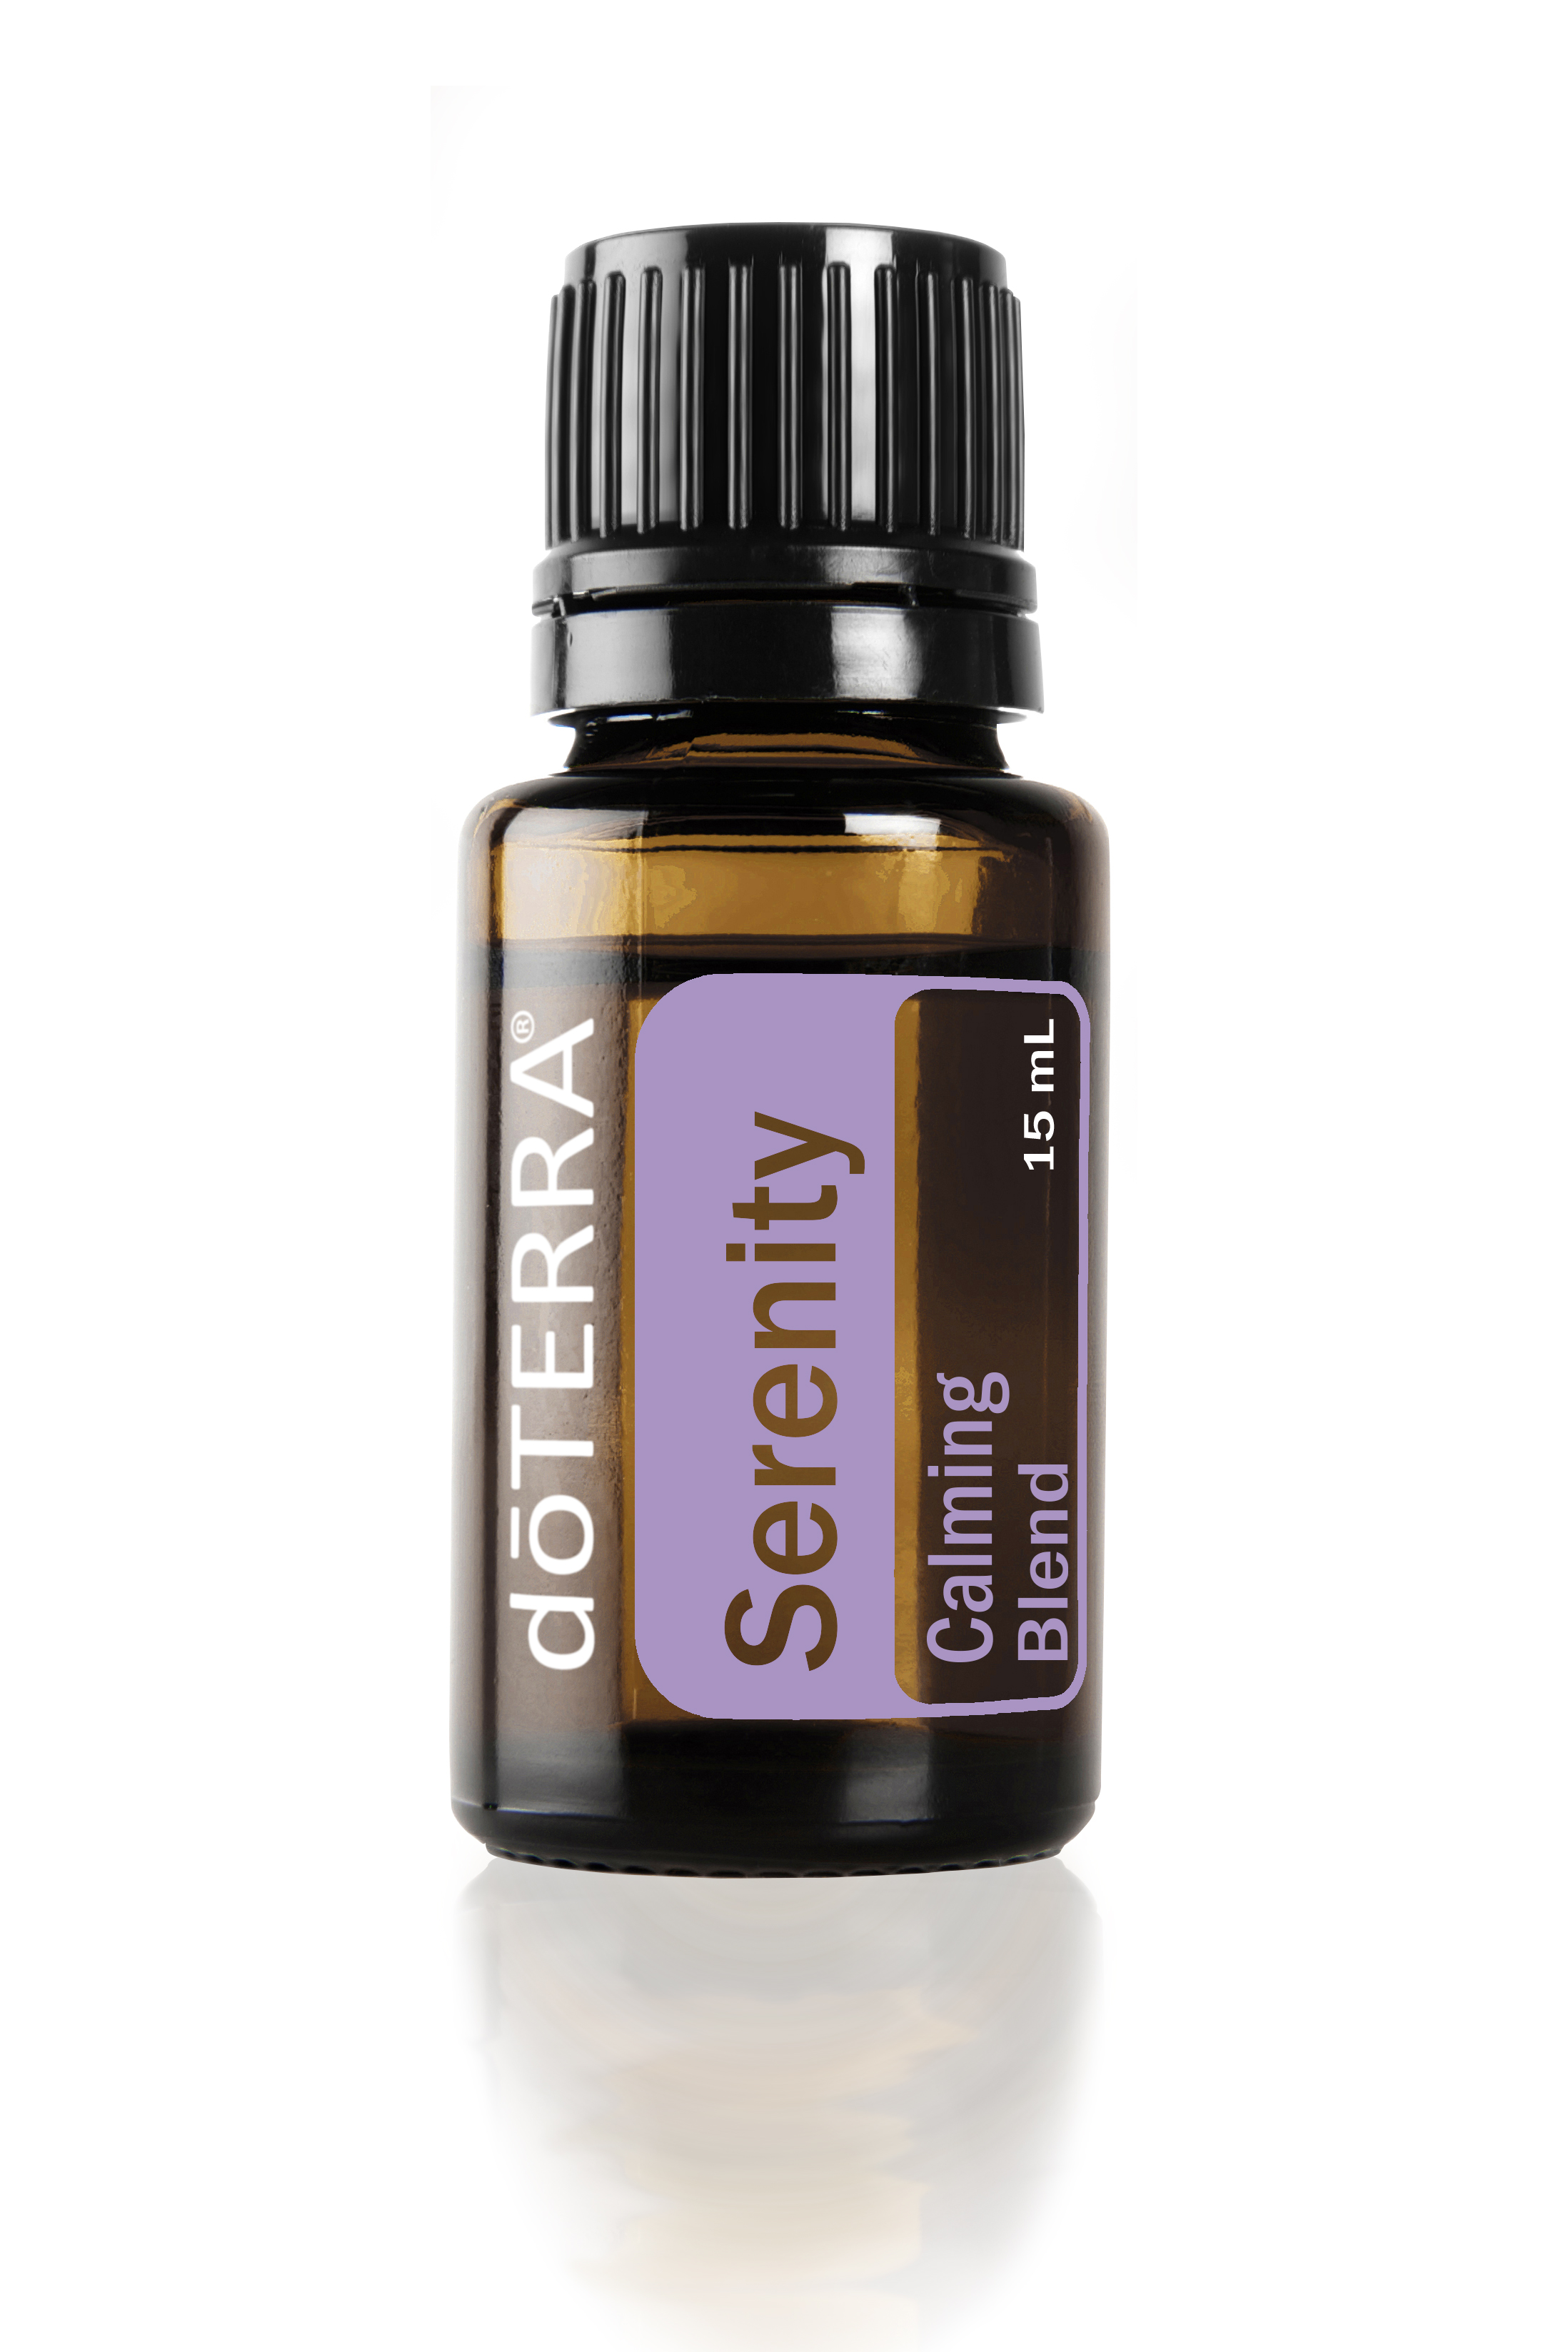 Serenity Essential Oils Calming Blend